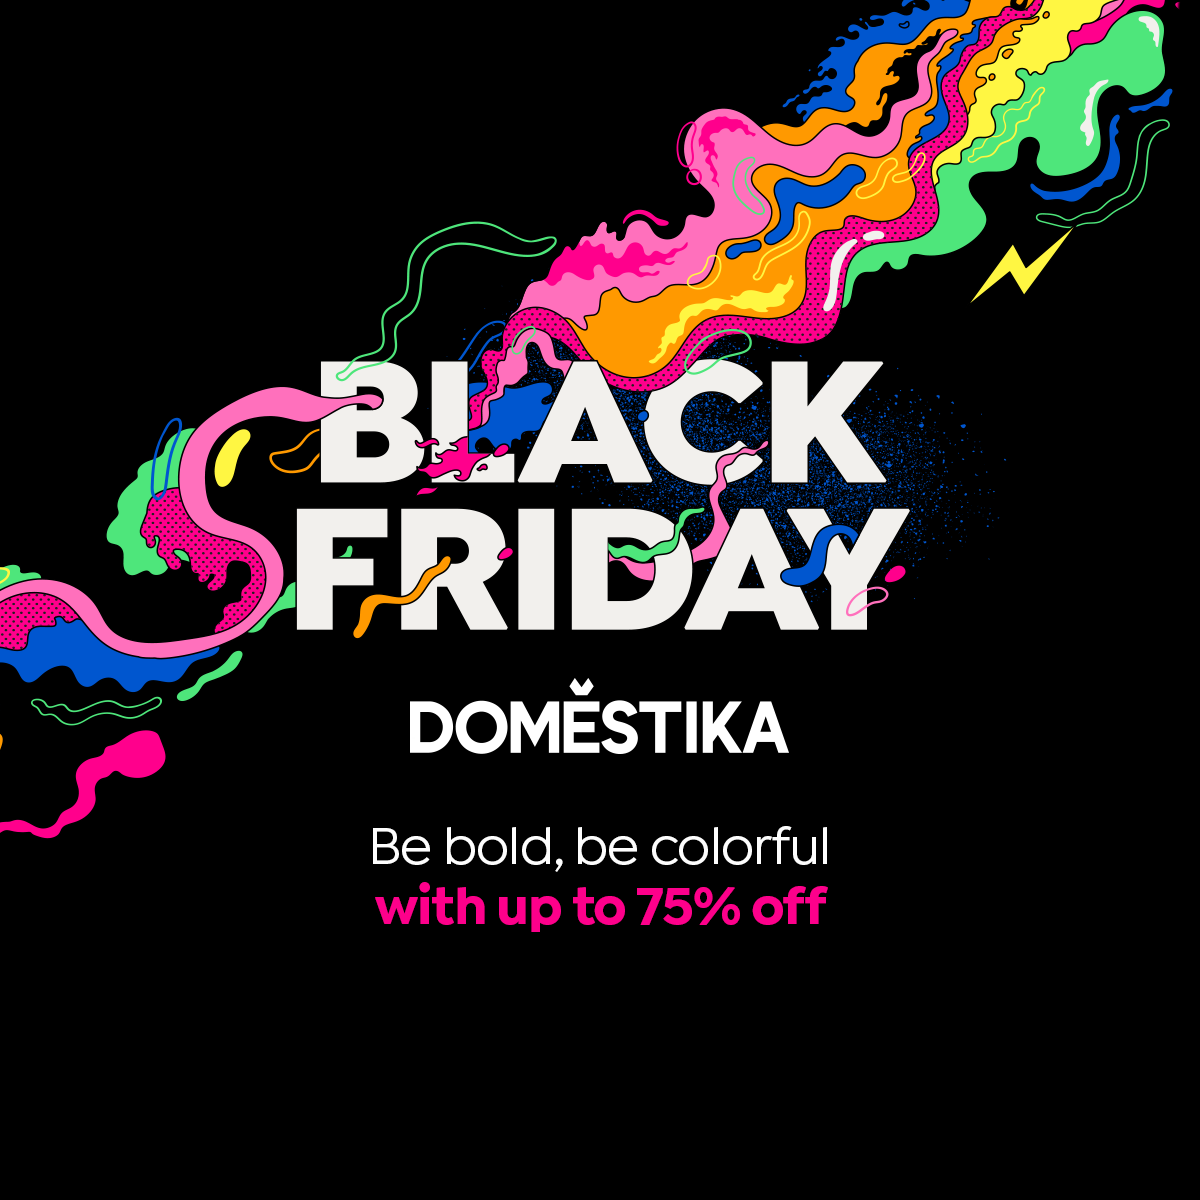 Domestika Black Friday Sale